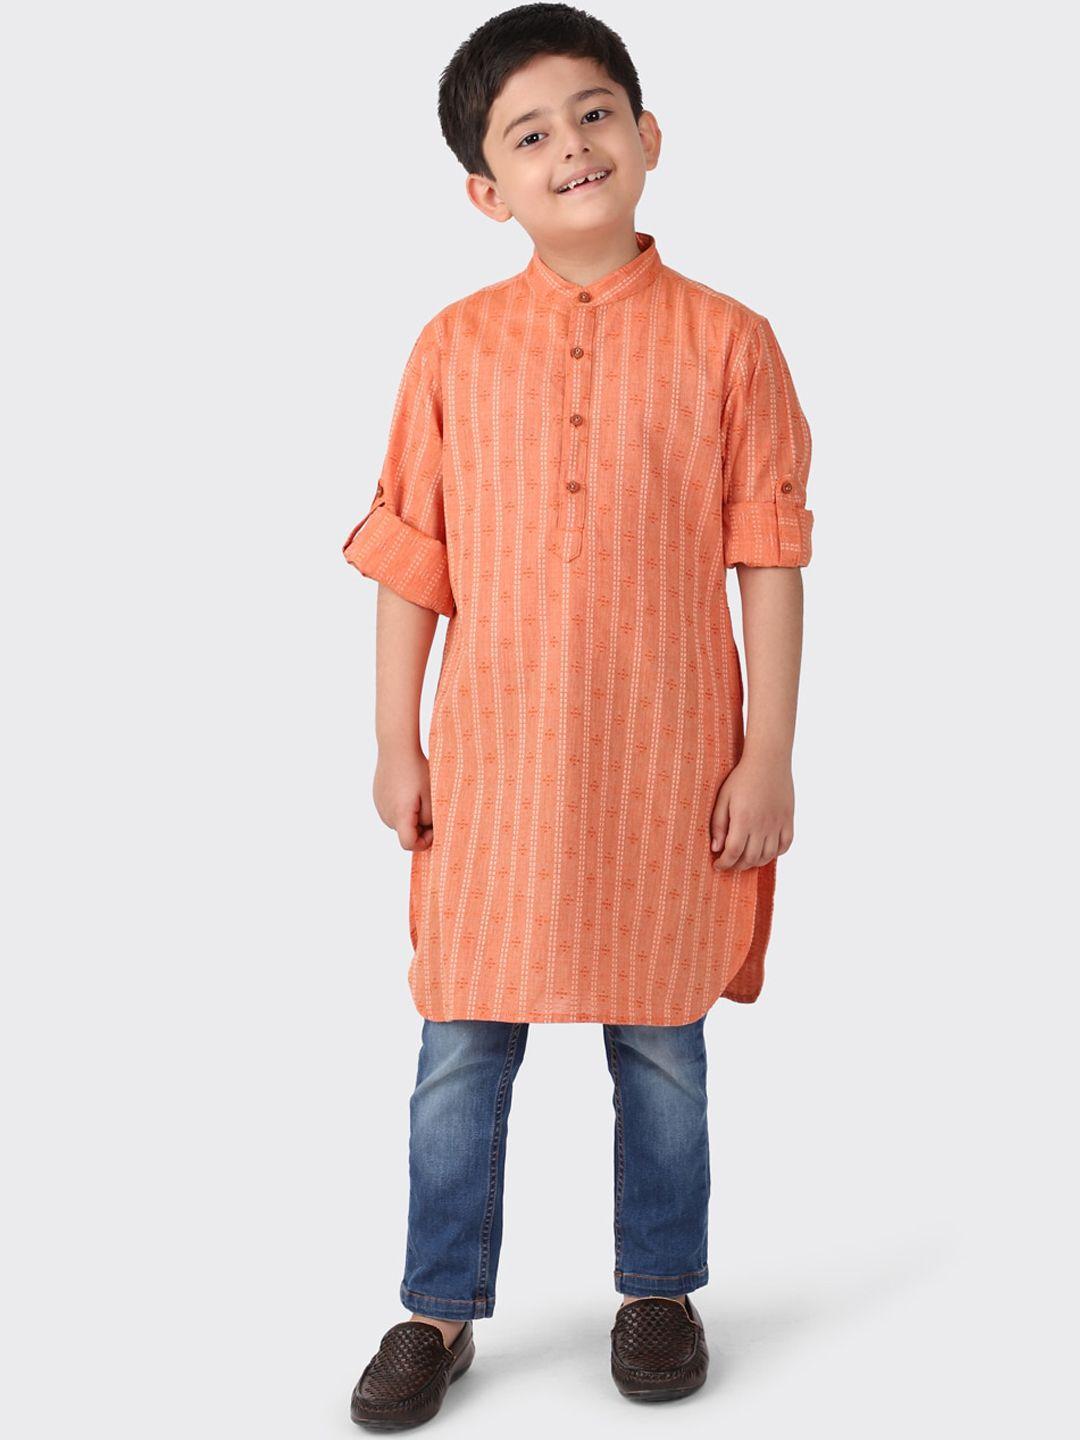 fabindia boys orange striped pathani kurta